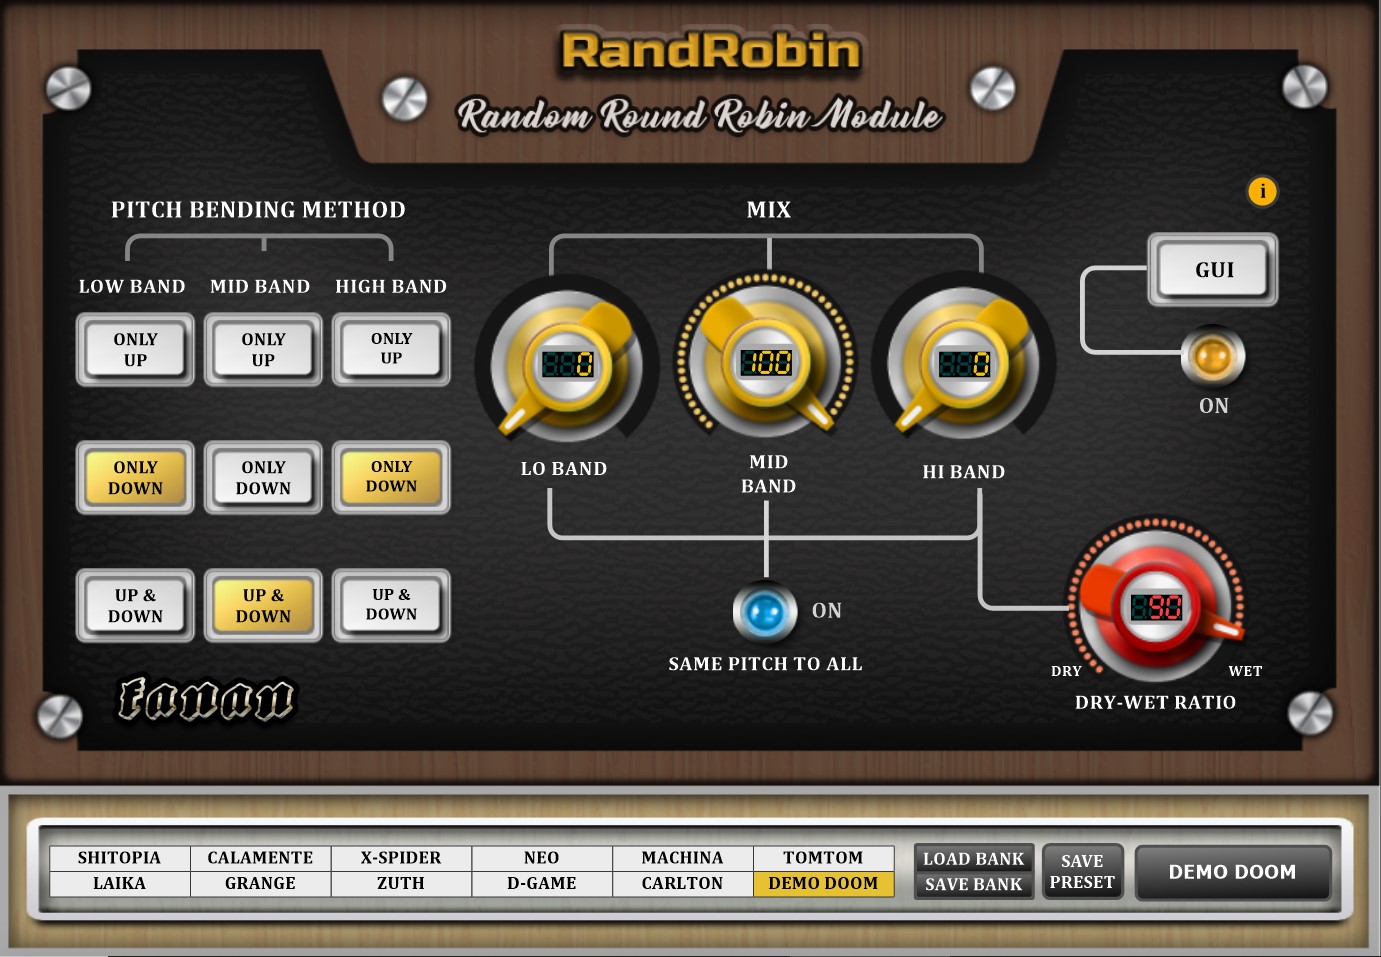 Fanan Team Releases RandRobin - A Free Random Round Robin Module for Windows